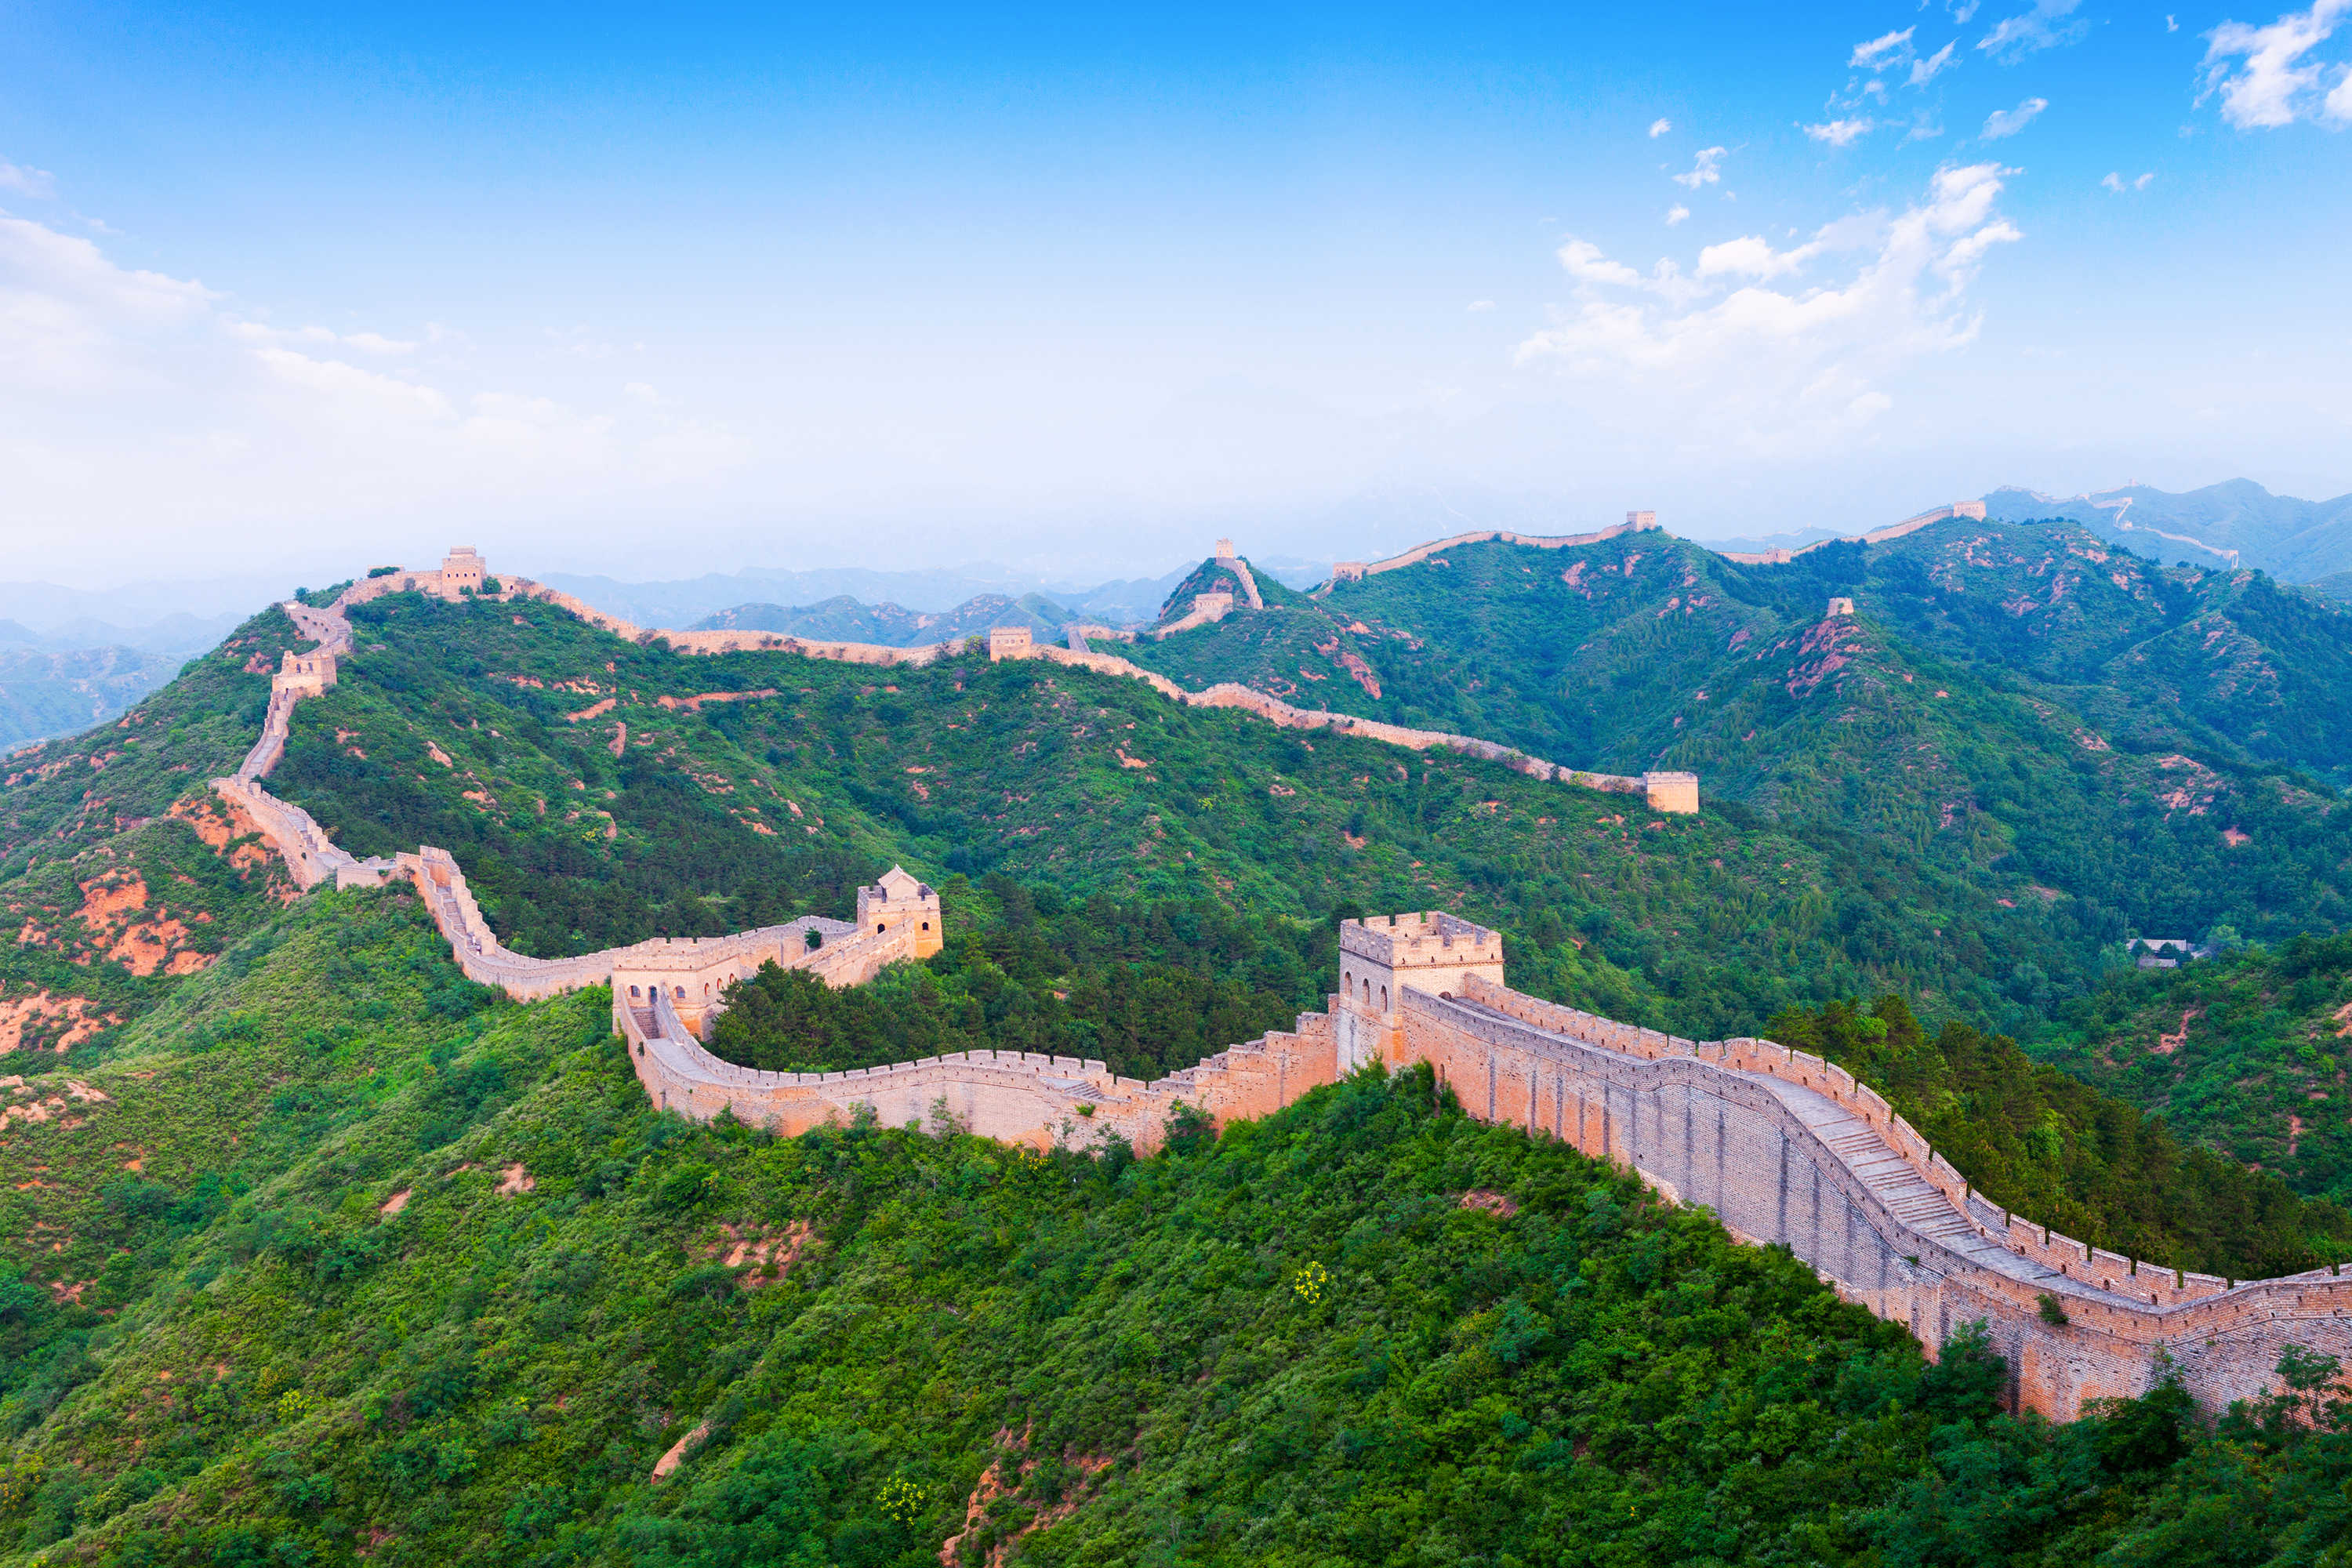 Великая стена википедия. Китай Великая китайская стена. Бадалин Пекин. Бадалин китайская стена. Великая китайская стена цинхай.